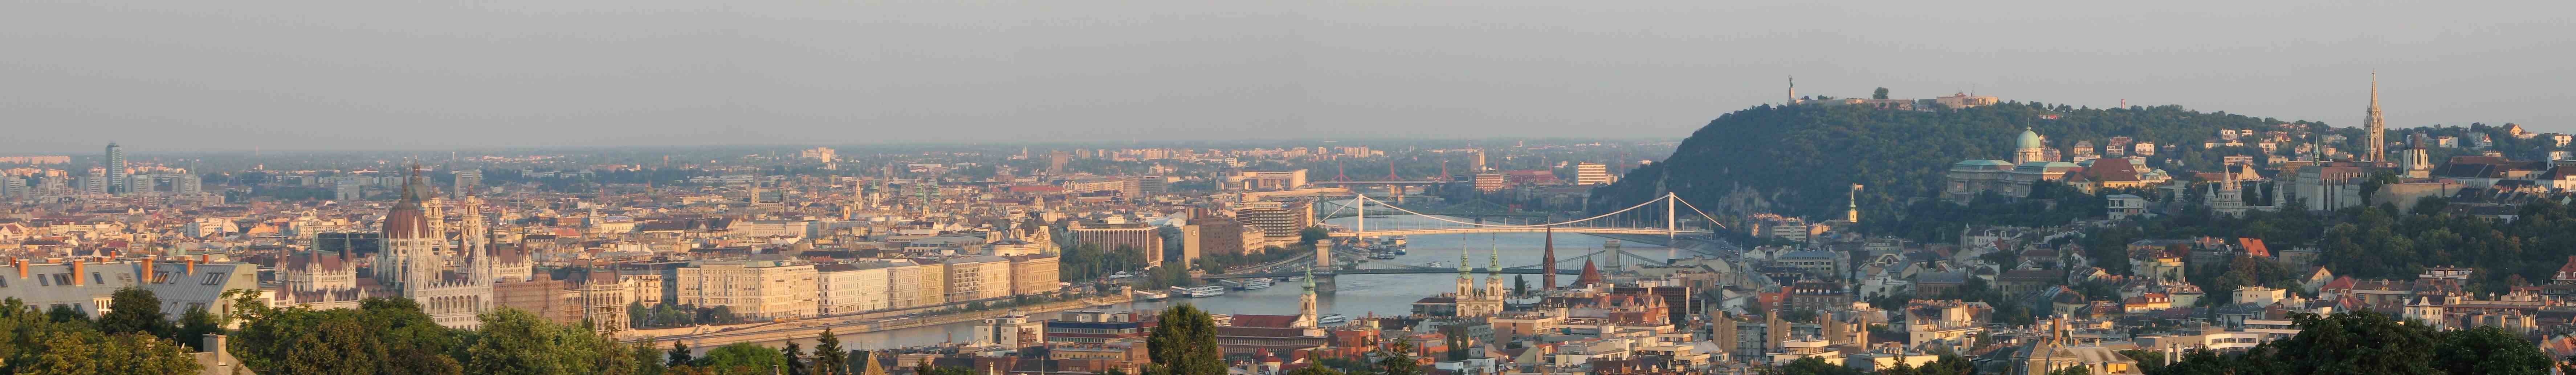 Budapest panorama. Photo borrowed from http://joshibudapest.wordpress.com/